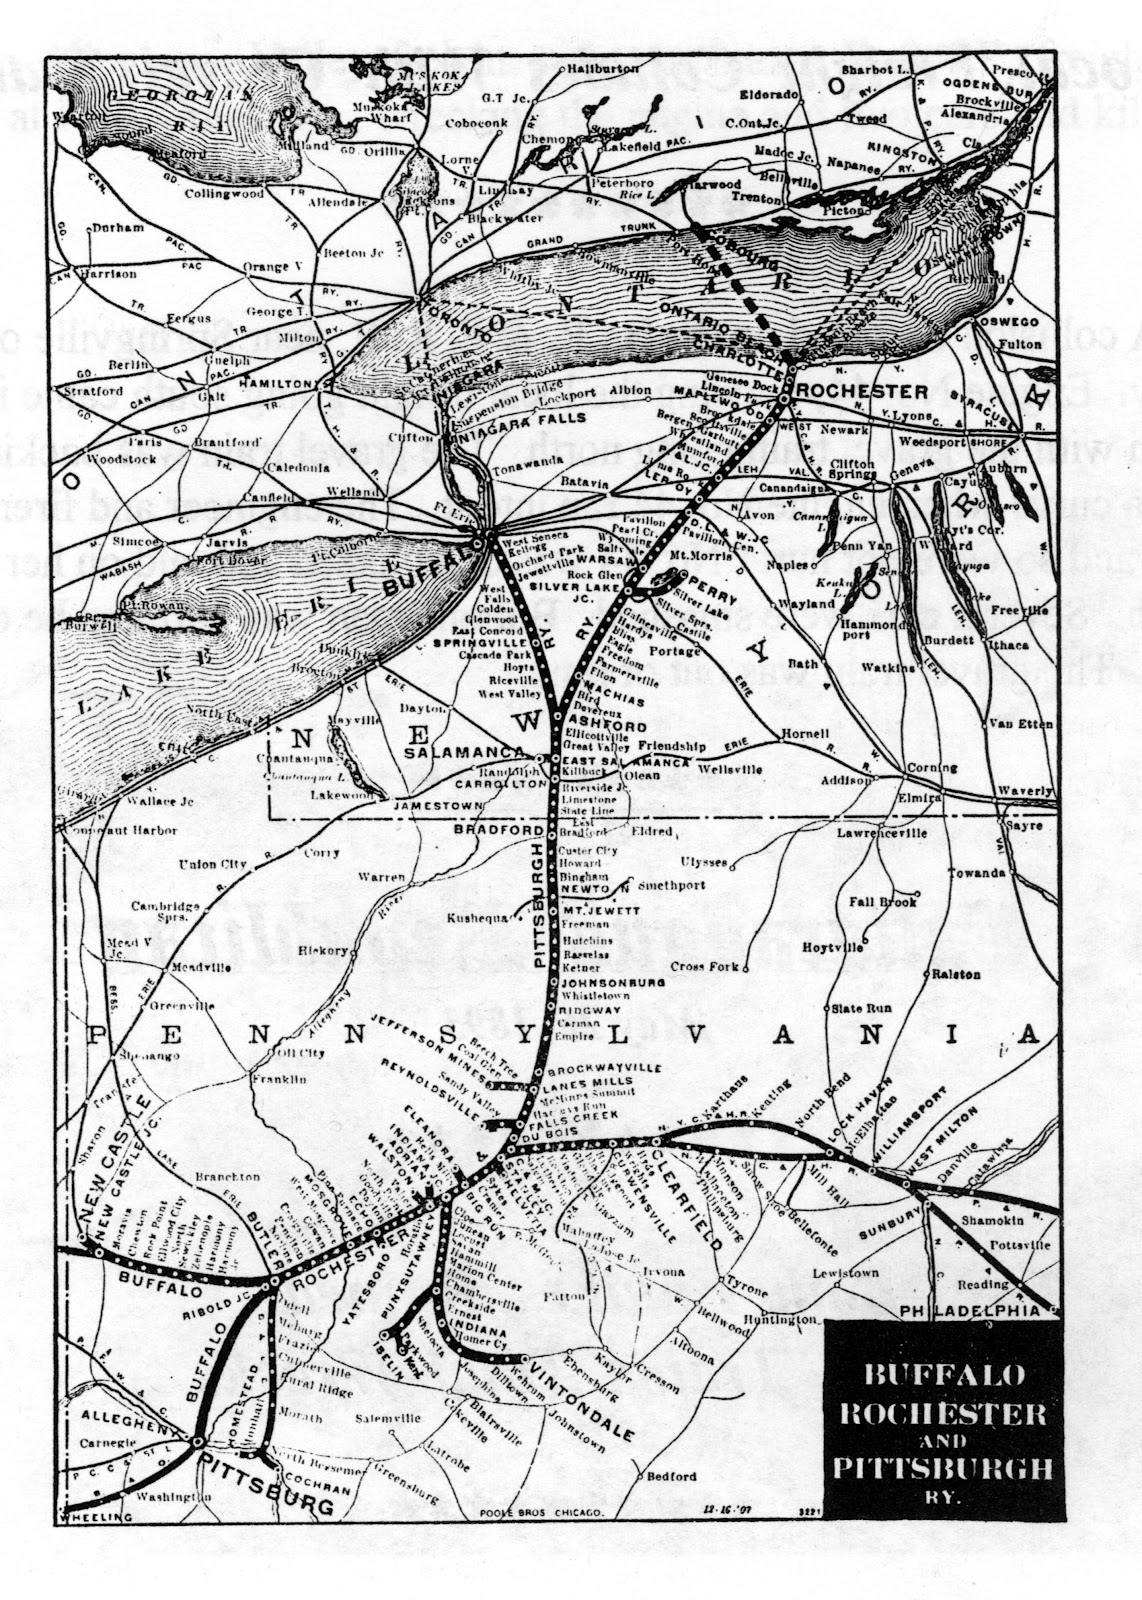 transpress nz: Buffalo, Rochester & Pittsburgh Railroad - 2